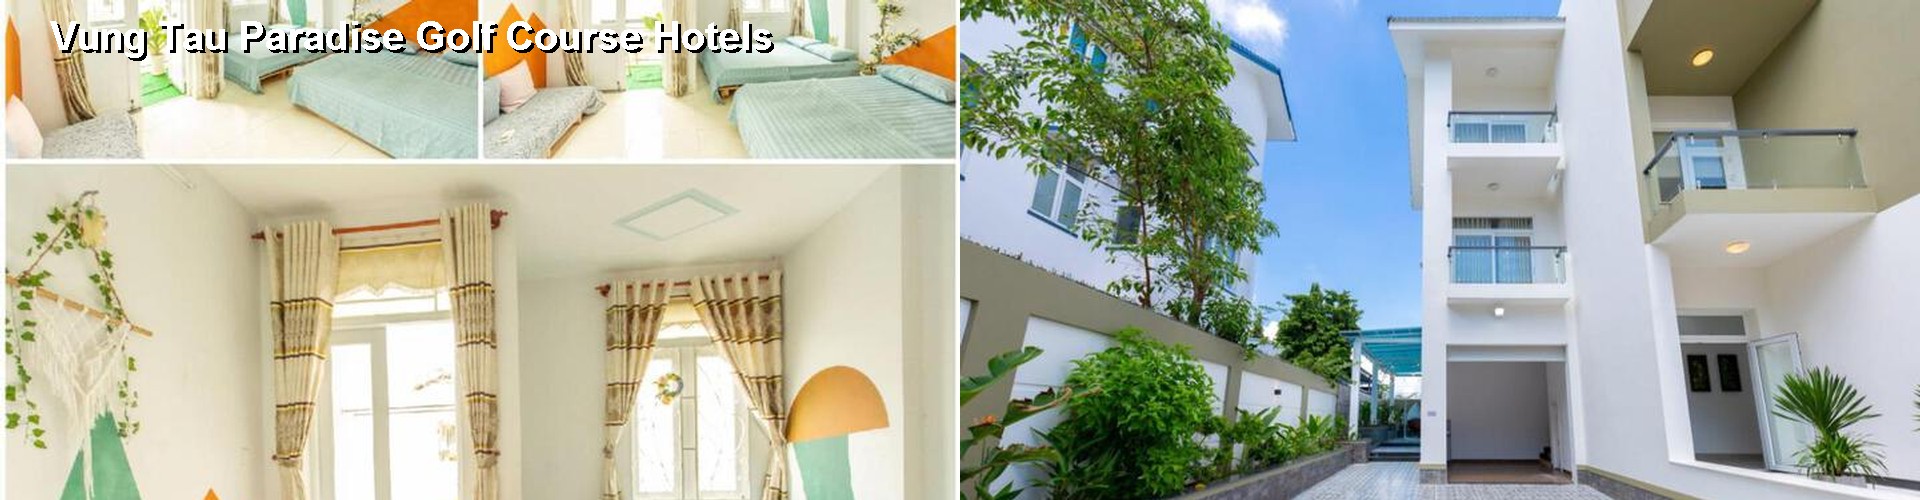 5 Best Hotels near Vung Tau Paradise Golf Course